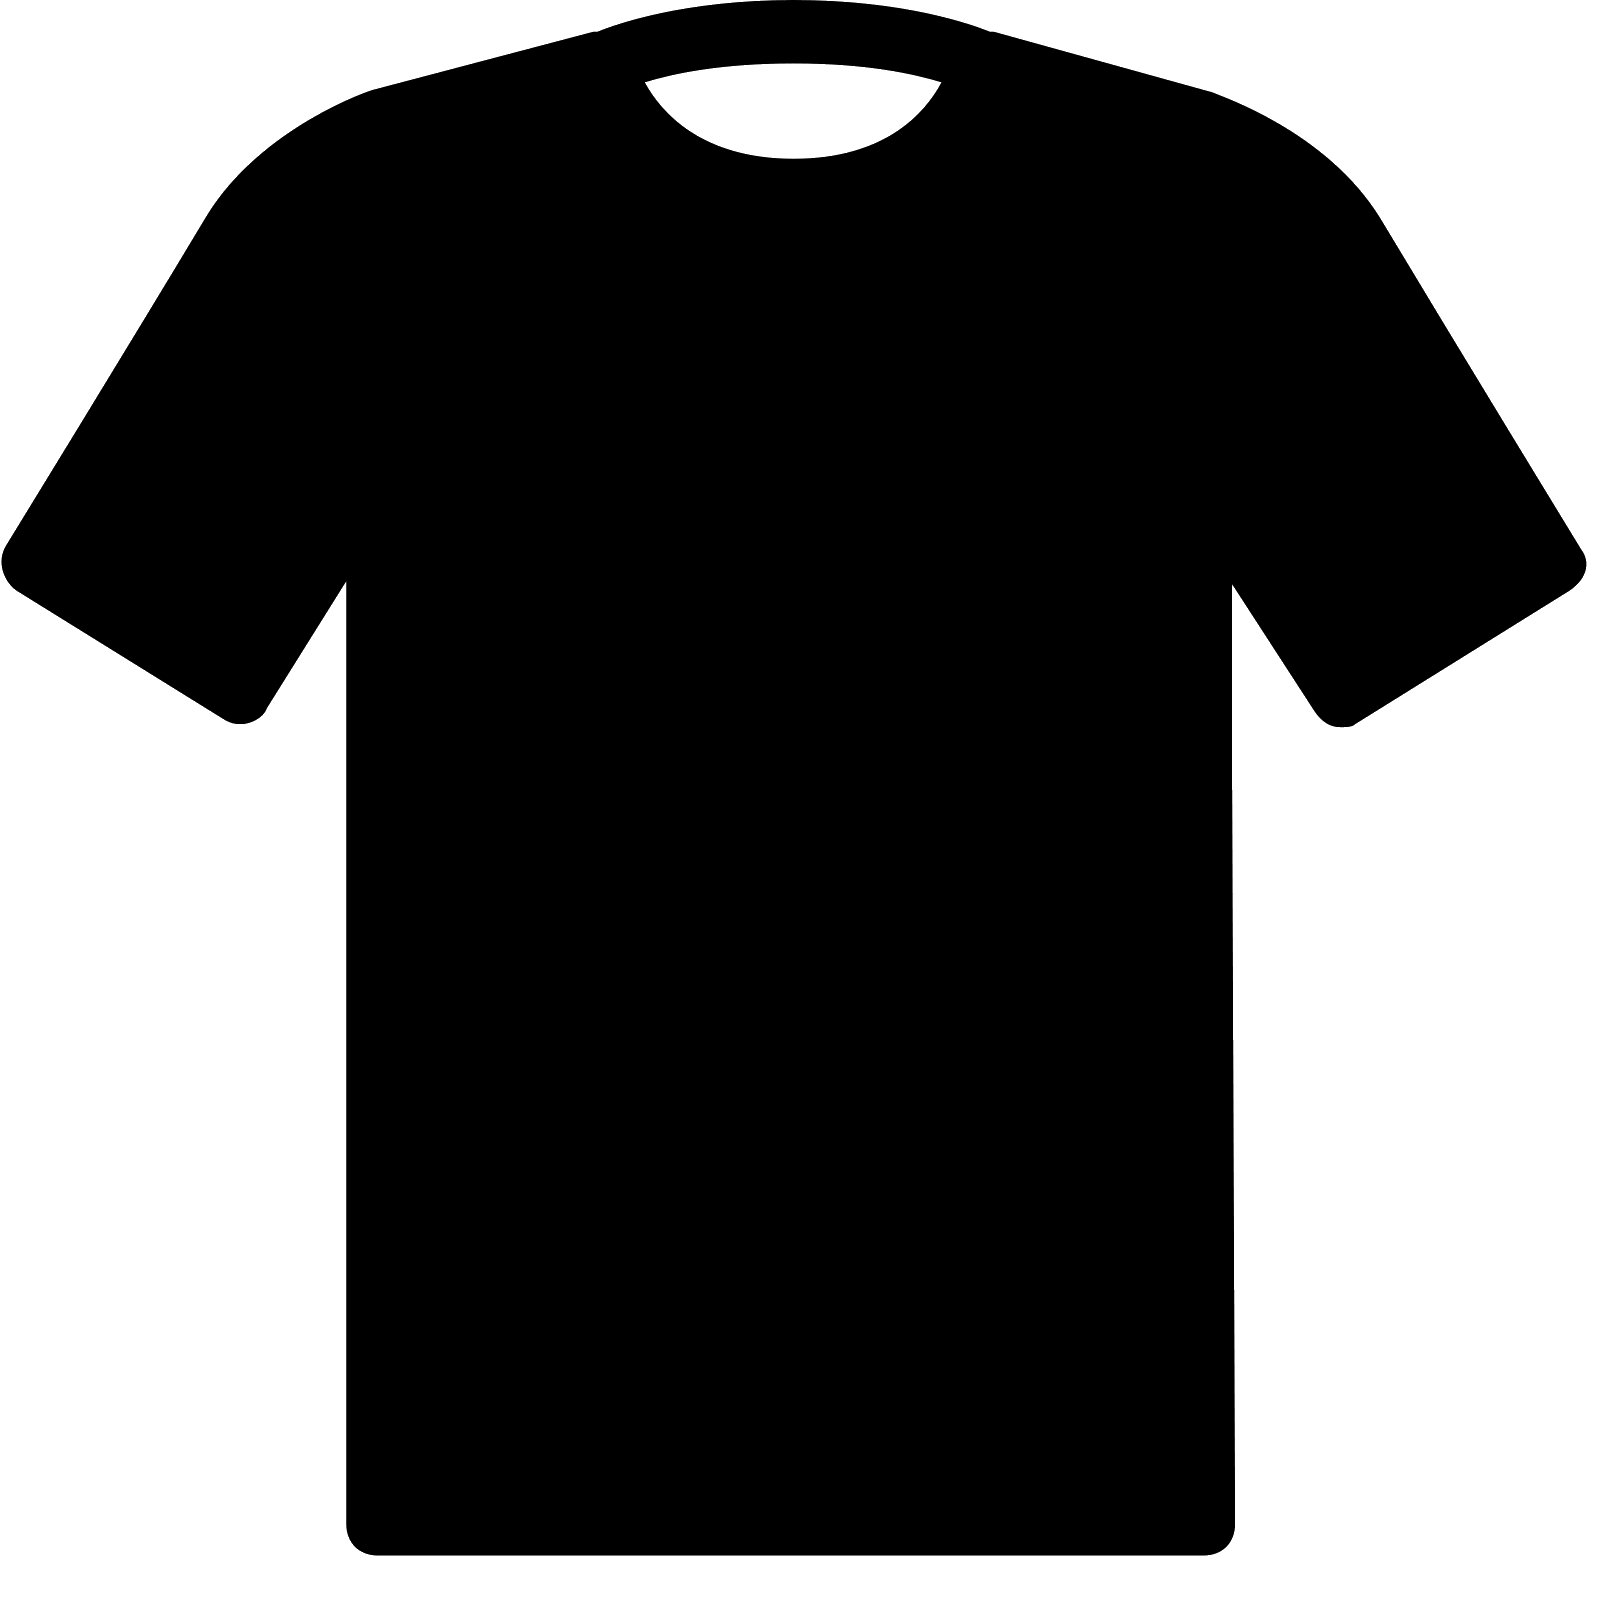 Ícone camisa Png - Baixar Imagens em PNG